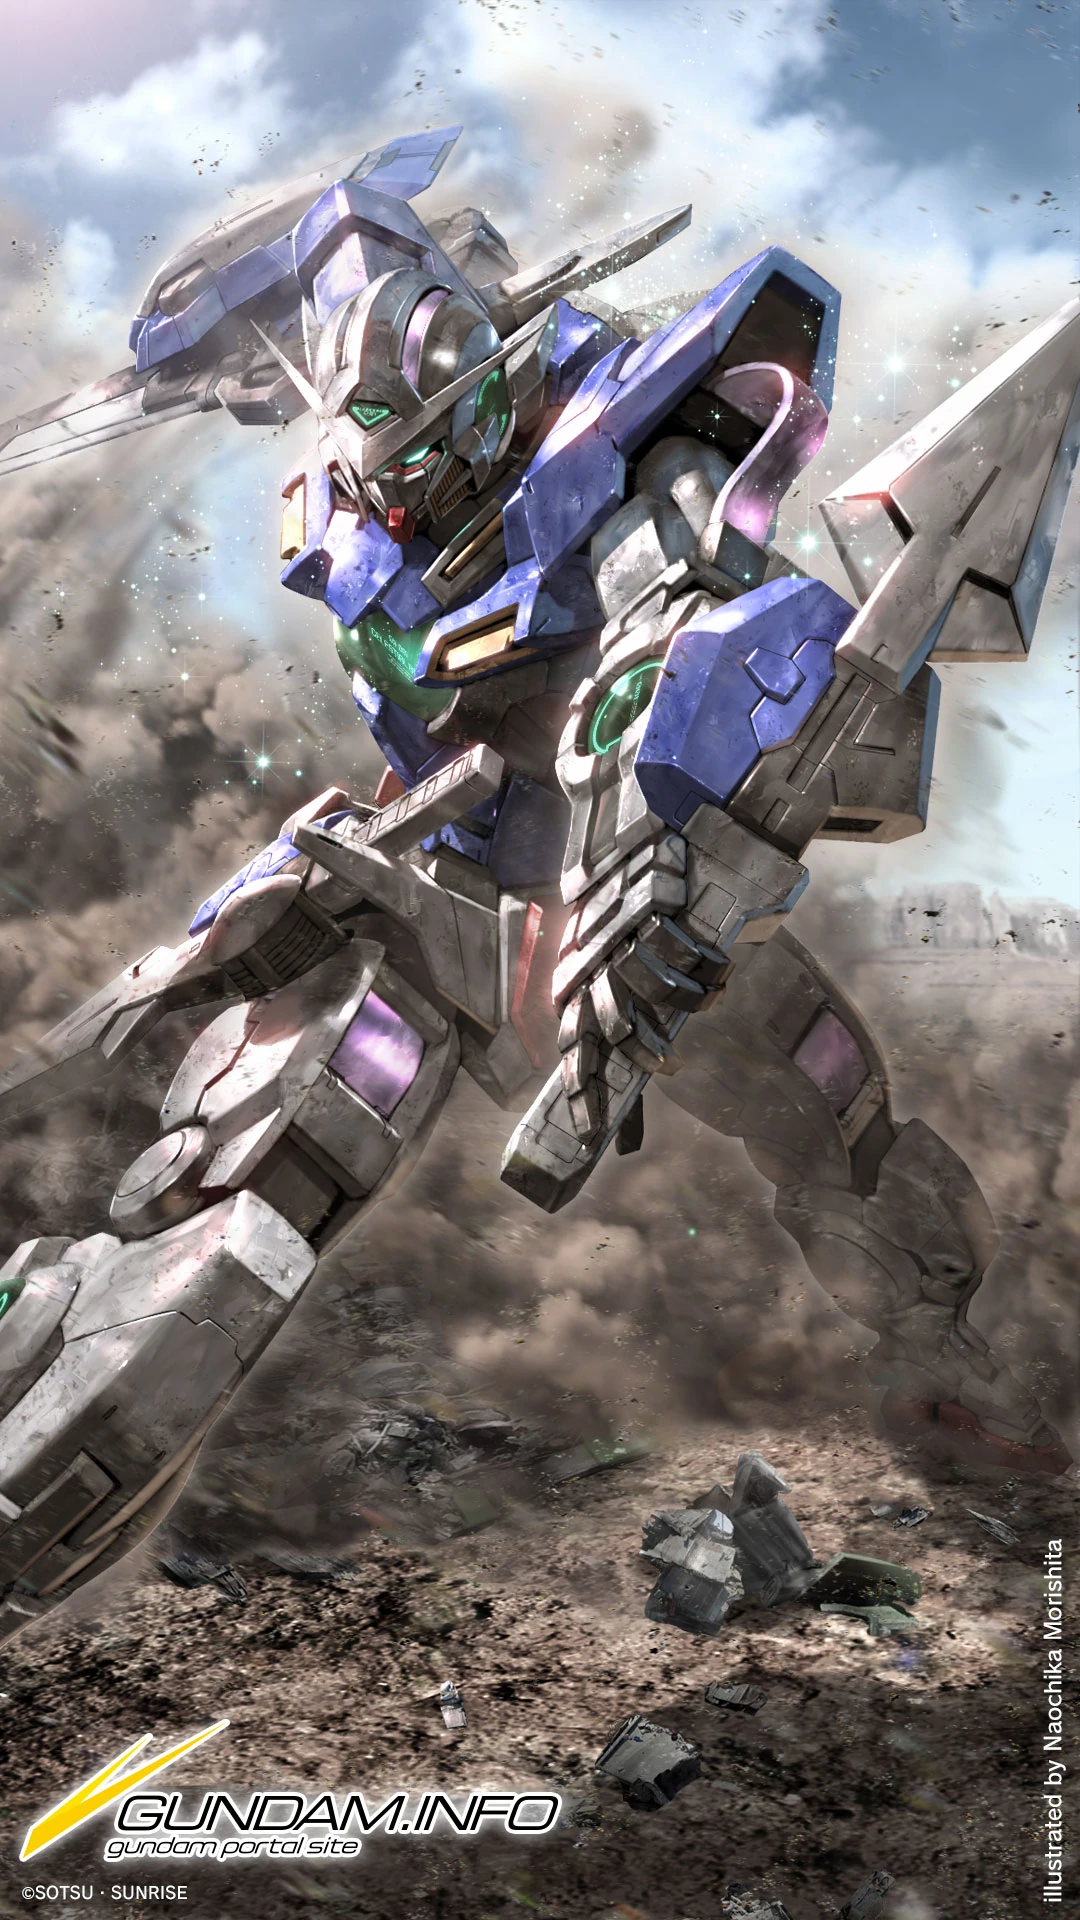 Gundam Wallpaper Nawpic